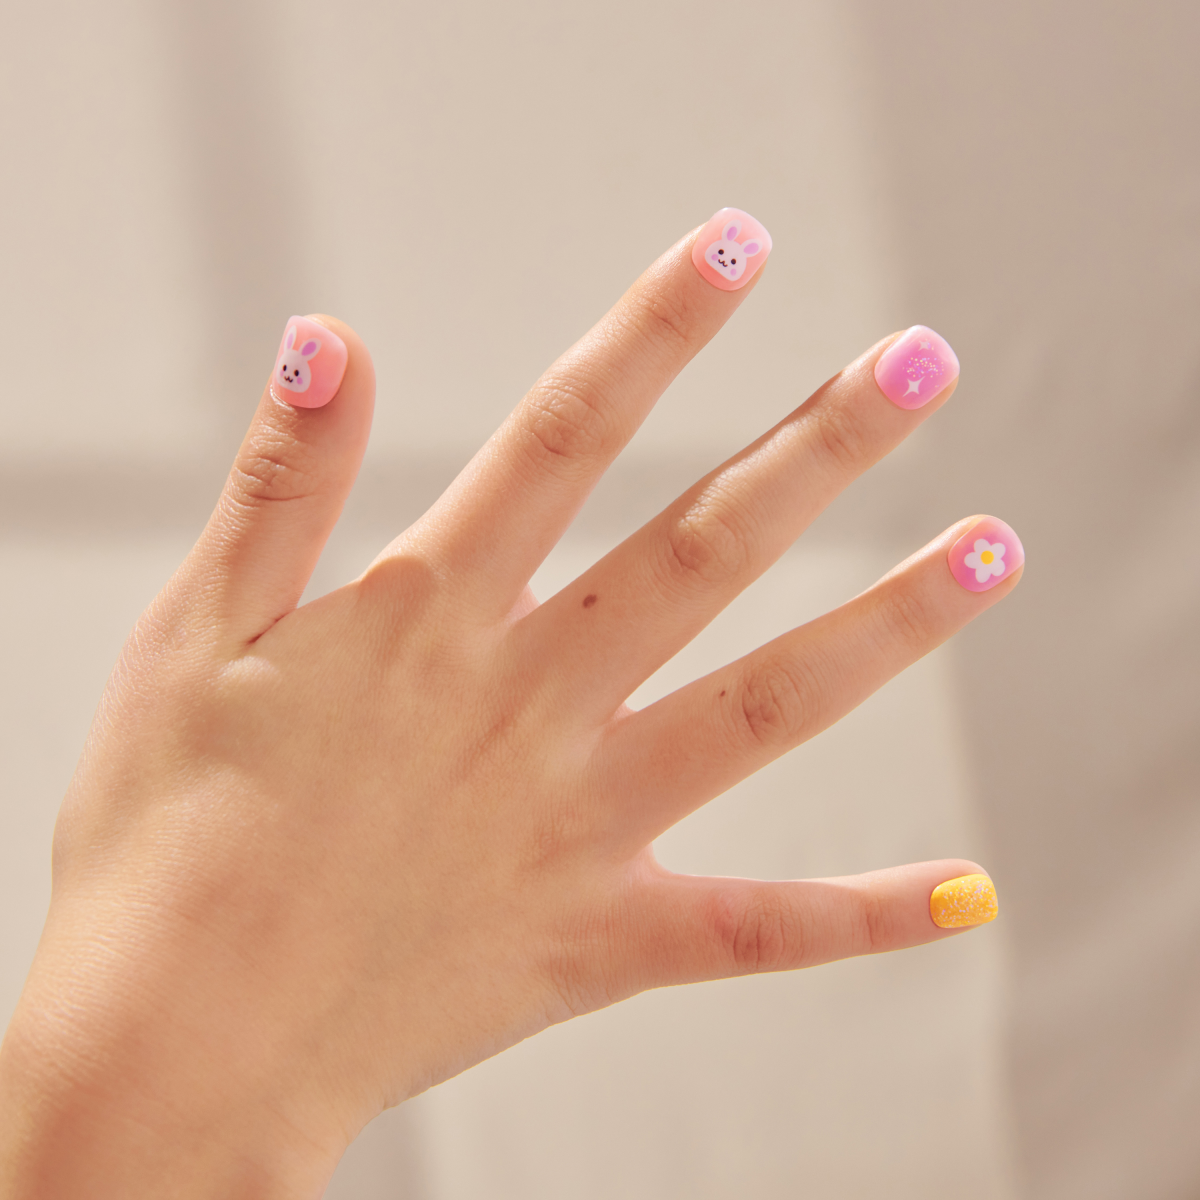 imPRESS Mini Easter Press-On Nails for Kids - Bun Bun